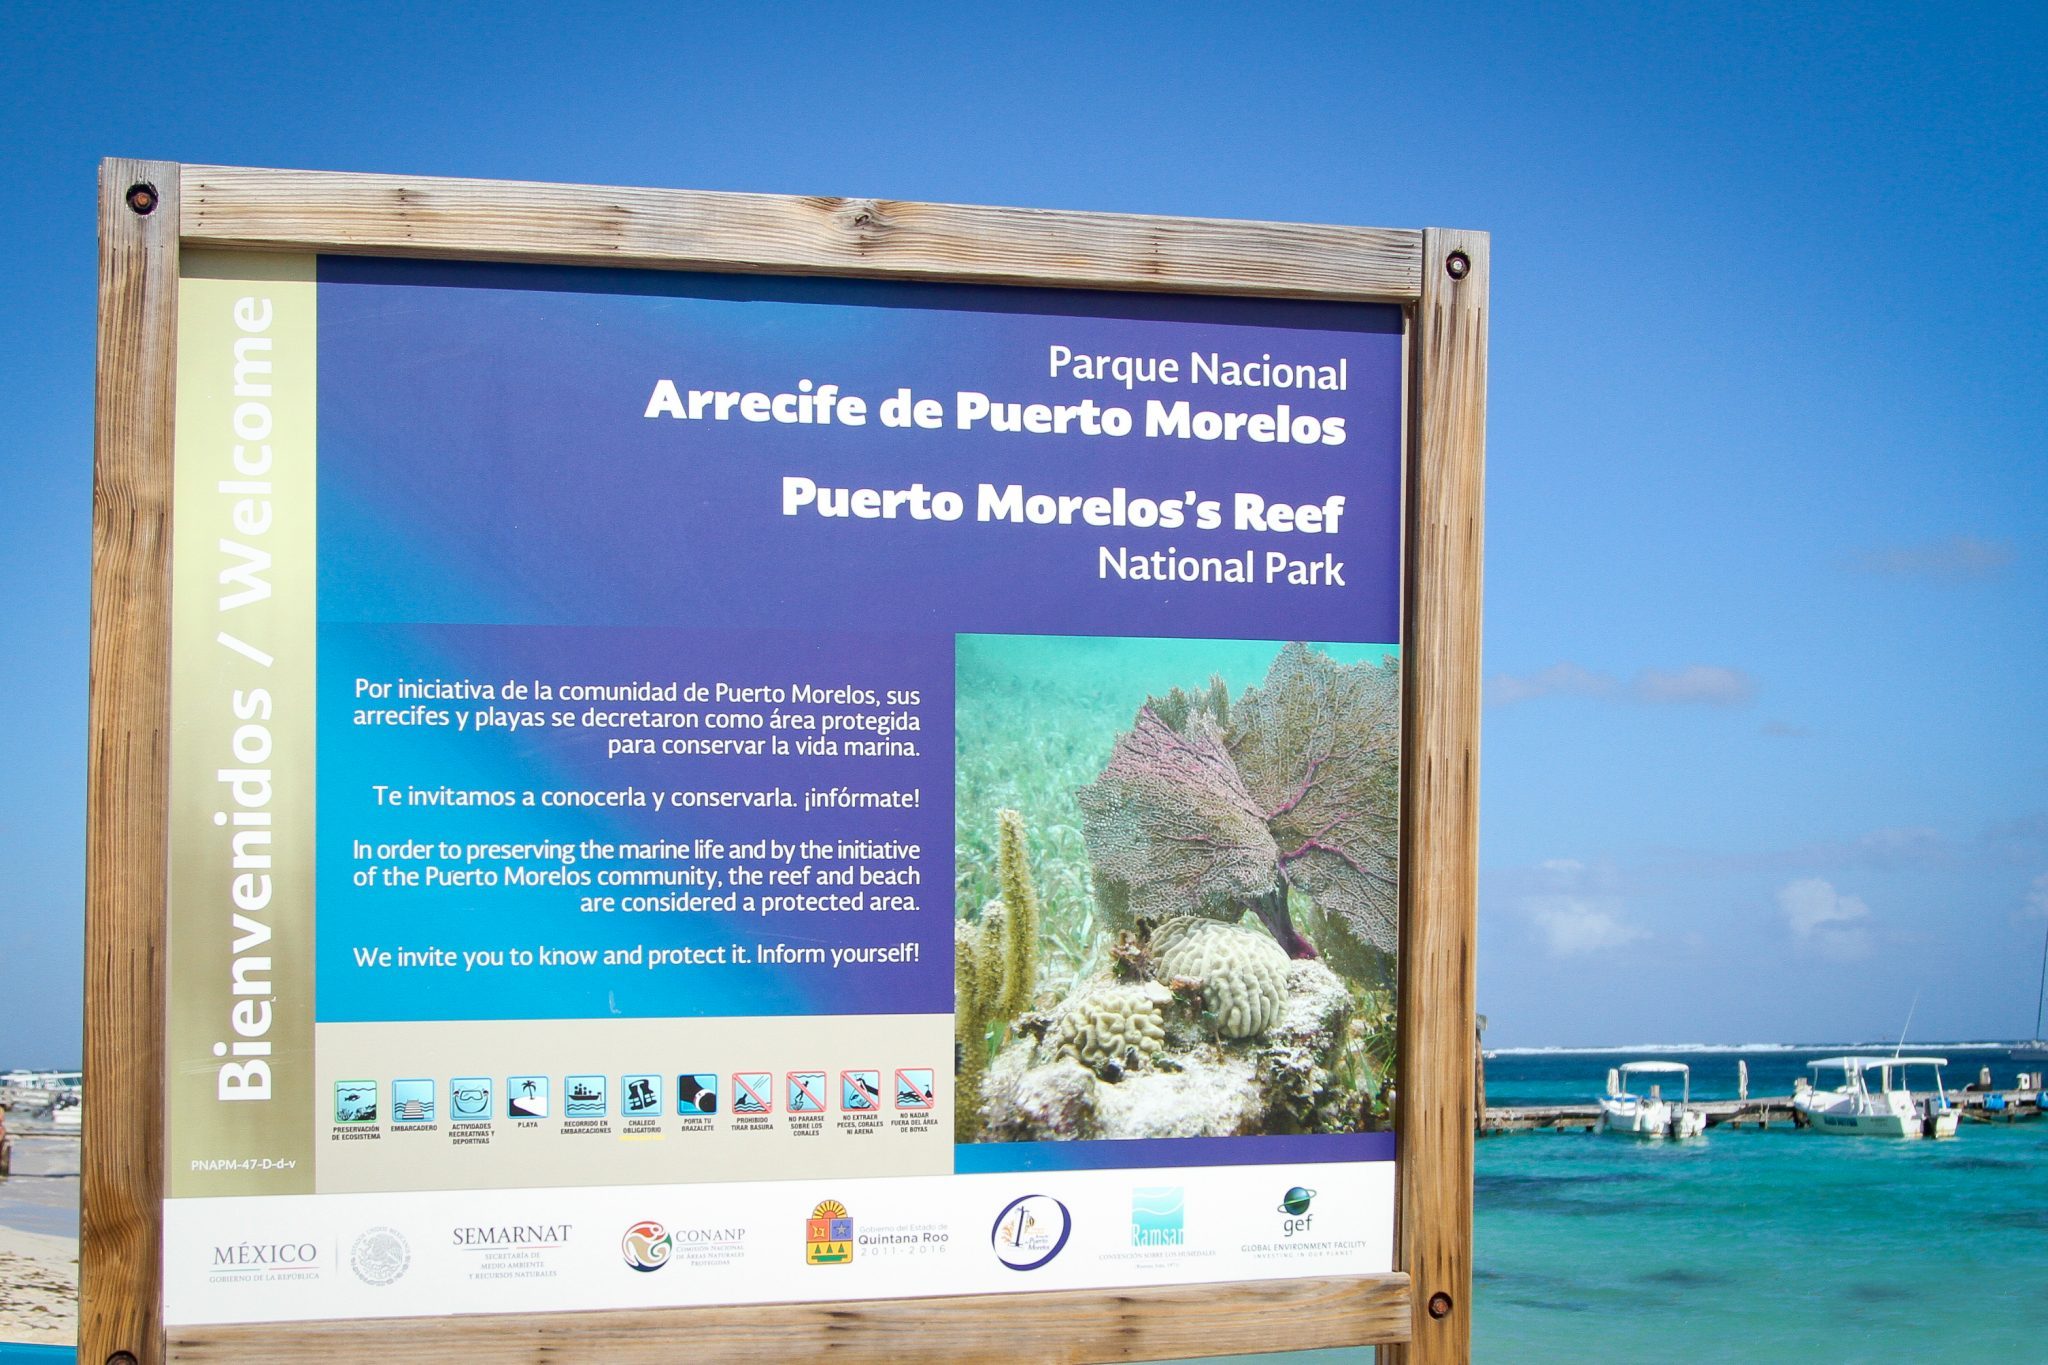 uerto Morelos Reef National Park